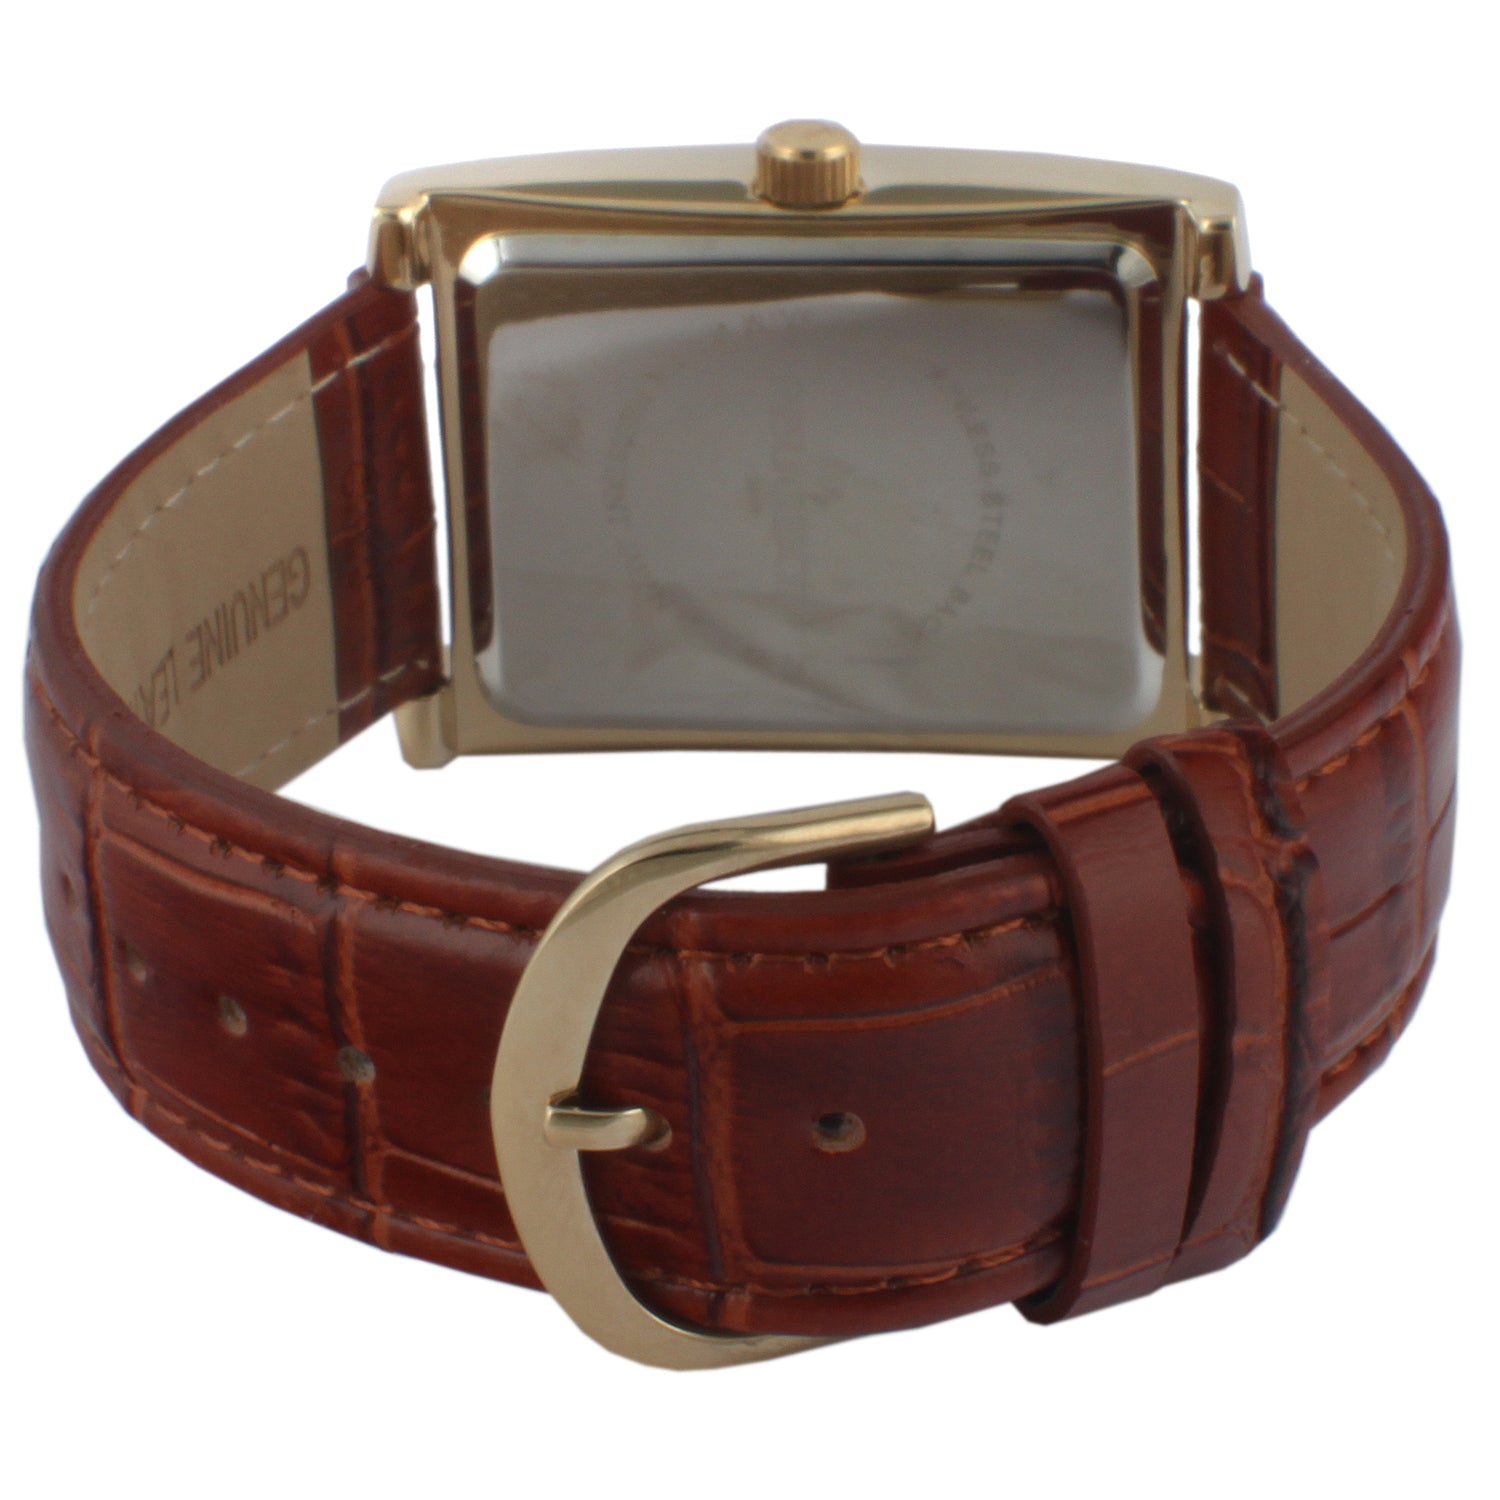 Peugeot Men's Vintage Leather Watch